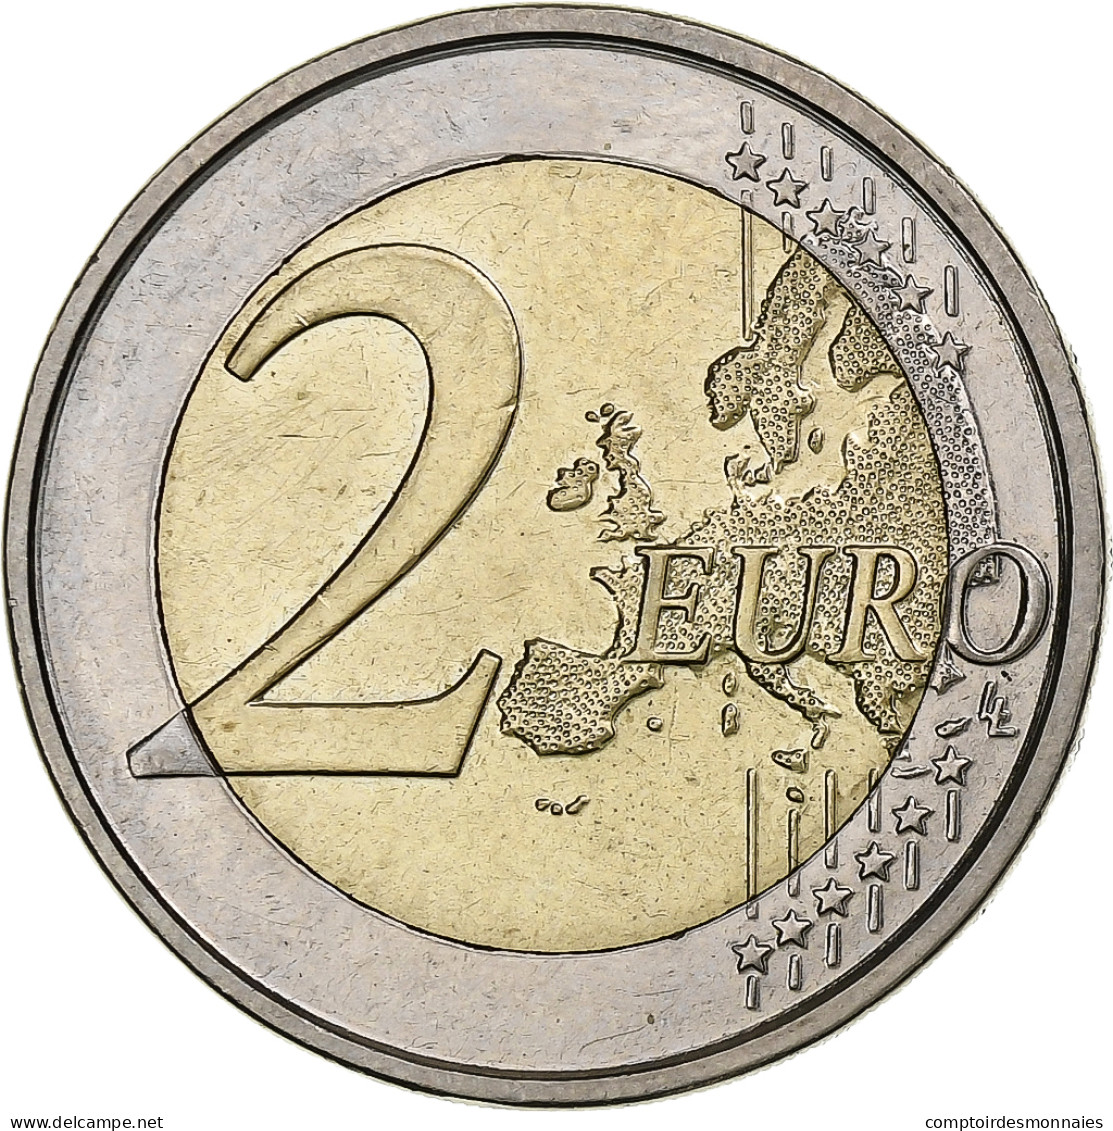 Belgique, Albert II, 2 Euro, 2009, Bruxelles, Bimétallique, SUP, KM:282 - België